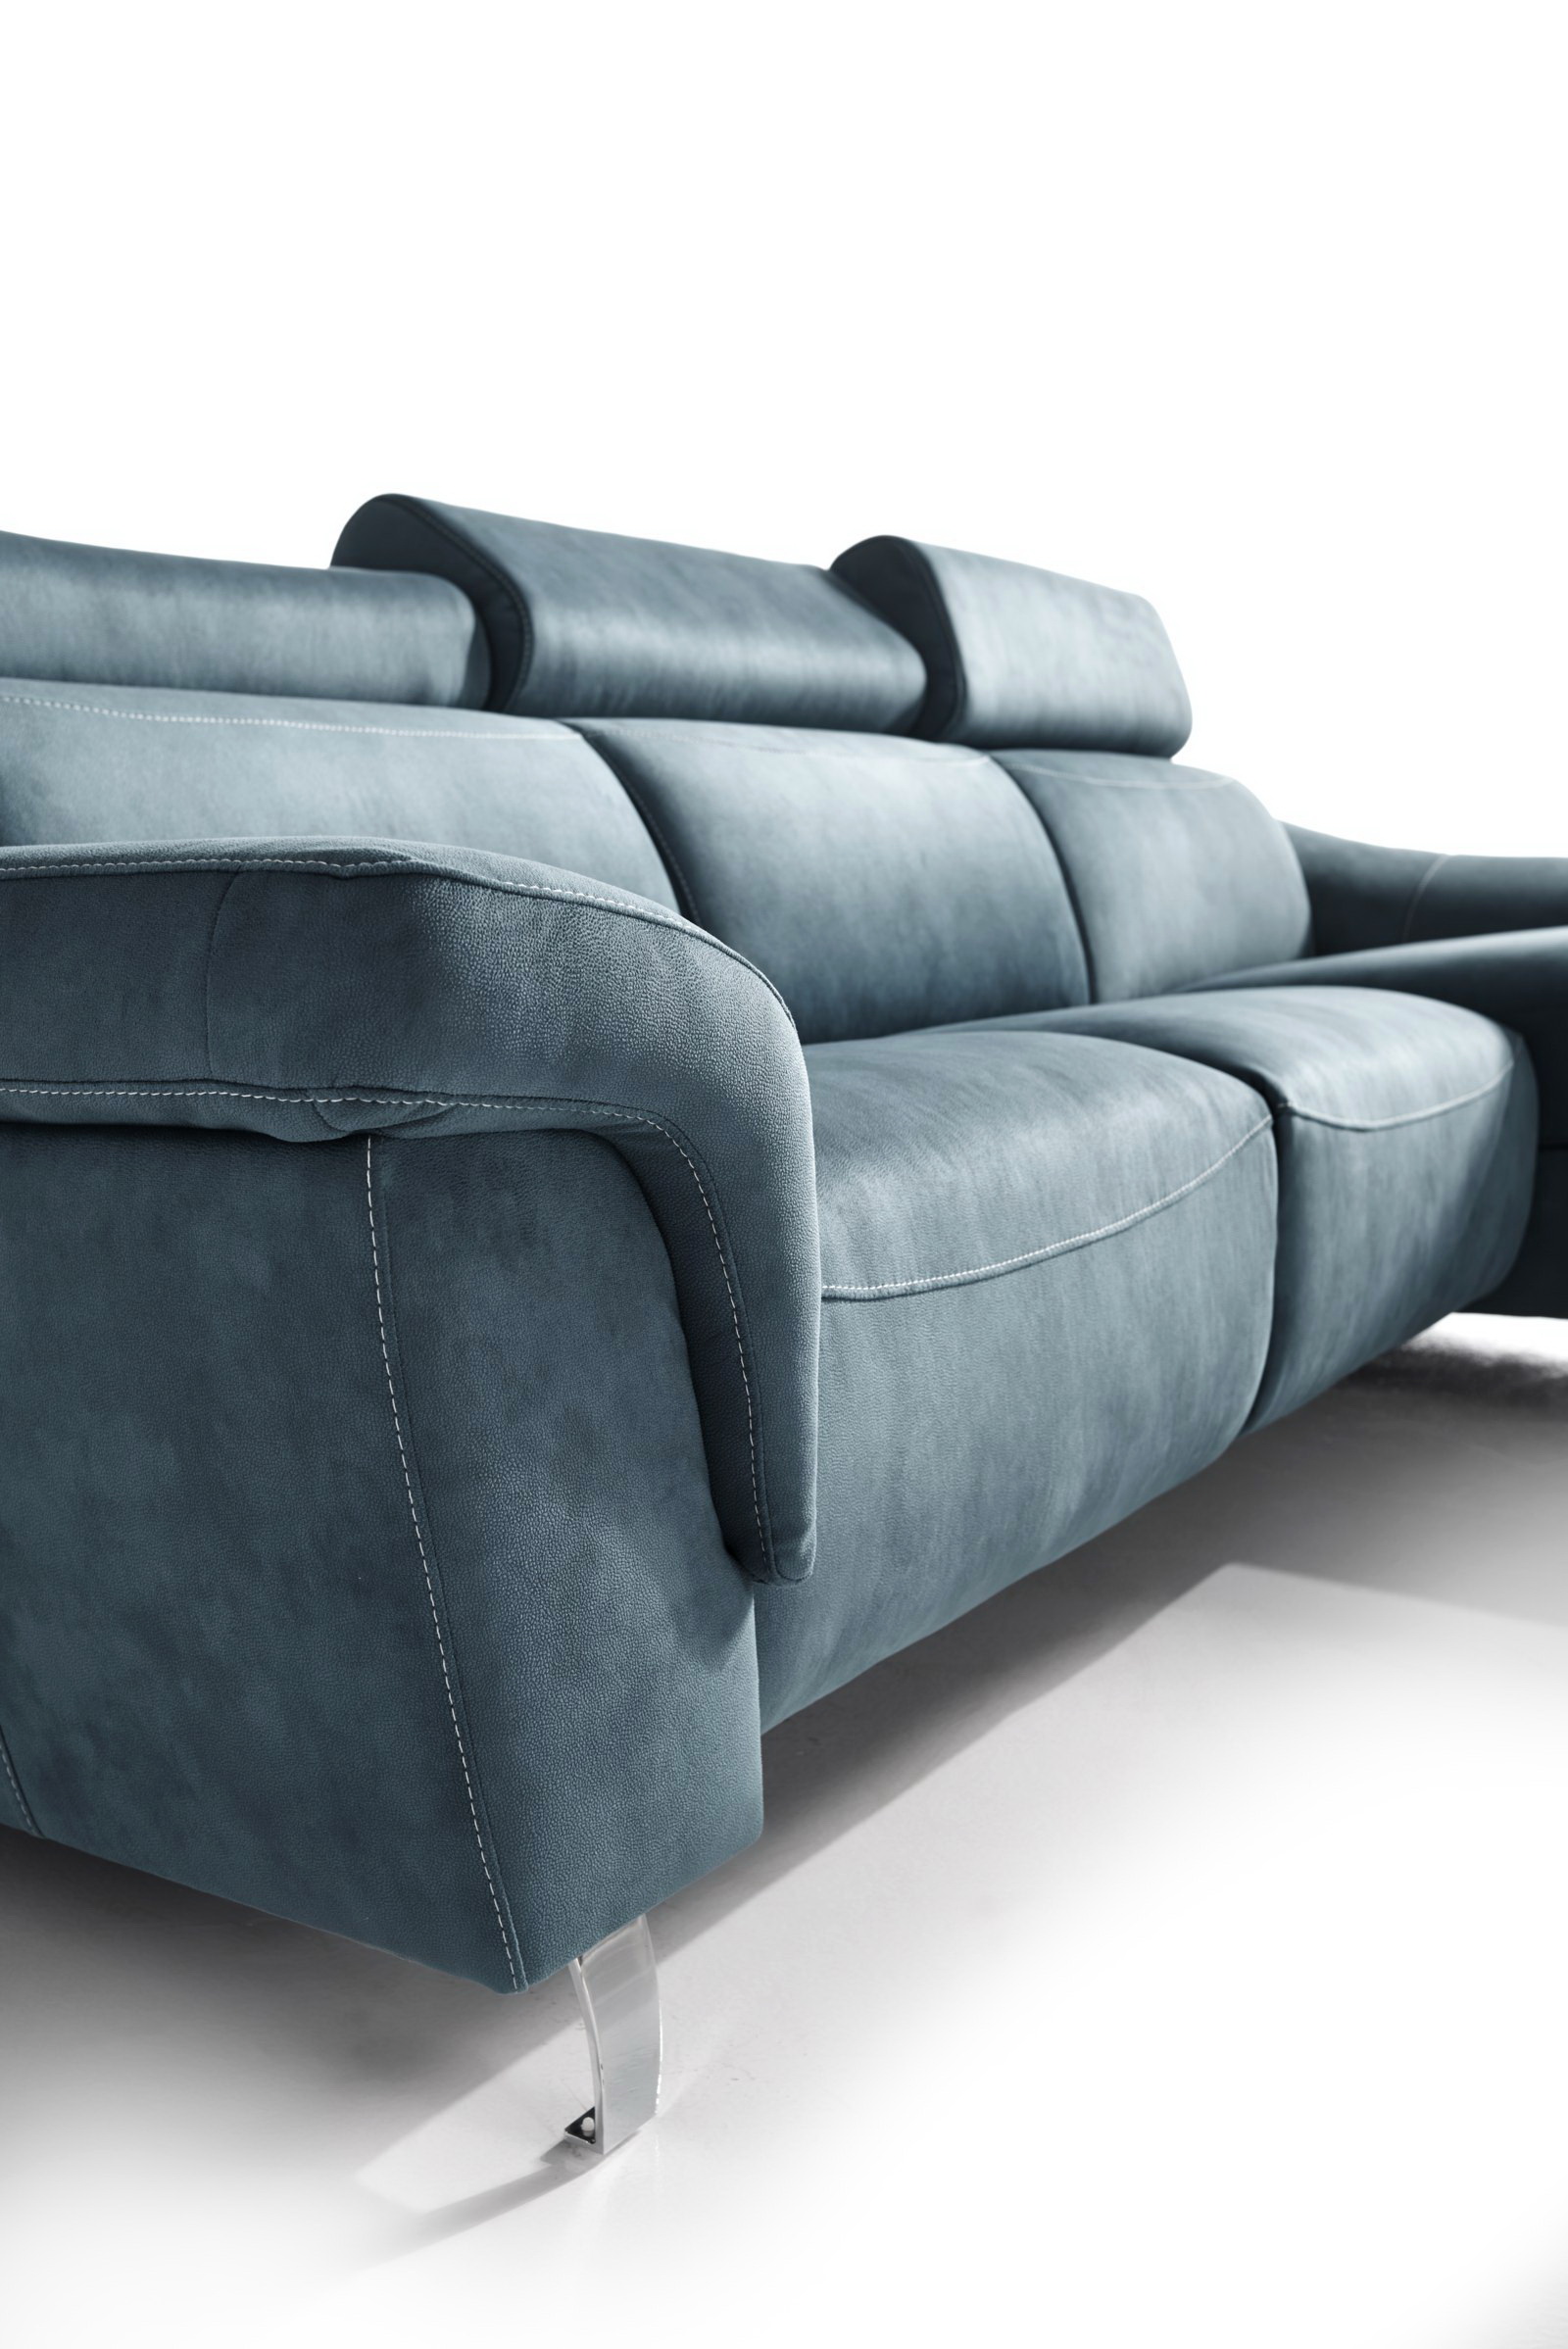 Sofá chaise-longue relax motorizado ALASKA 4 by Future Design Confort en muebles antoñán® León